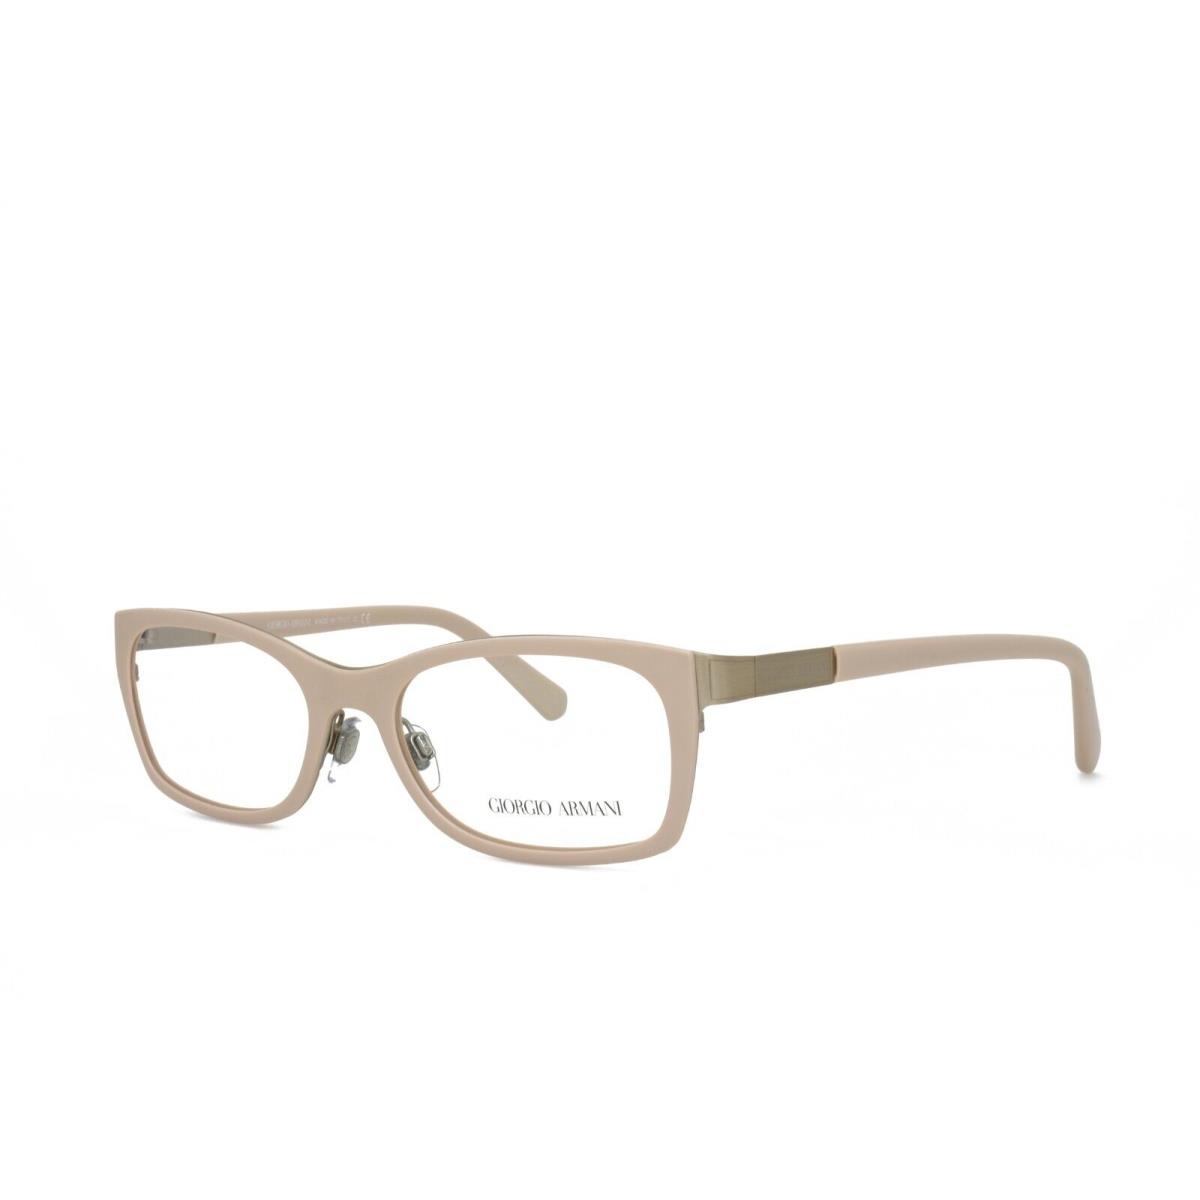 Giorgio Armani 5013 3029 50-17-135 Beige Eyeglasses Frames